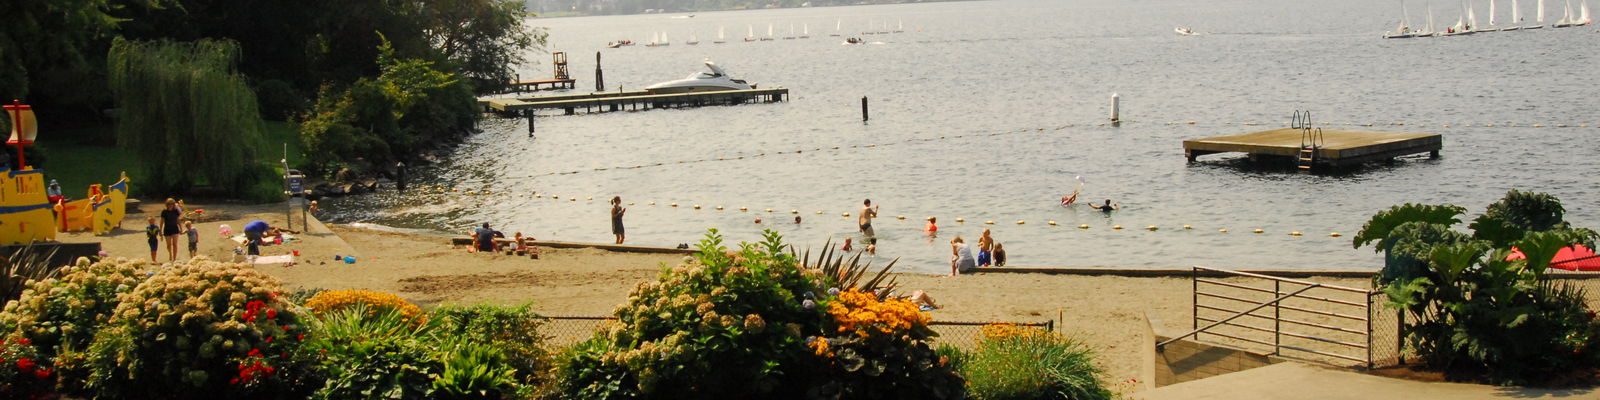 Lake Washington waterfront park in Bellevue